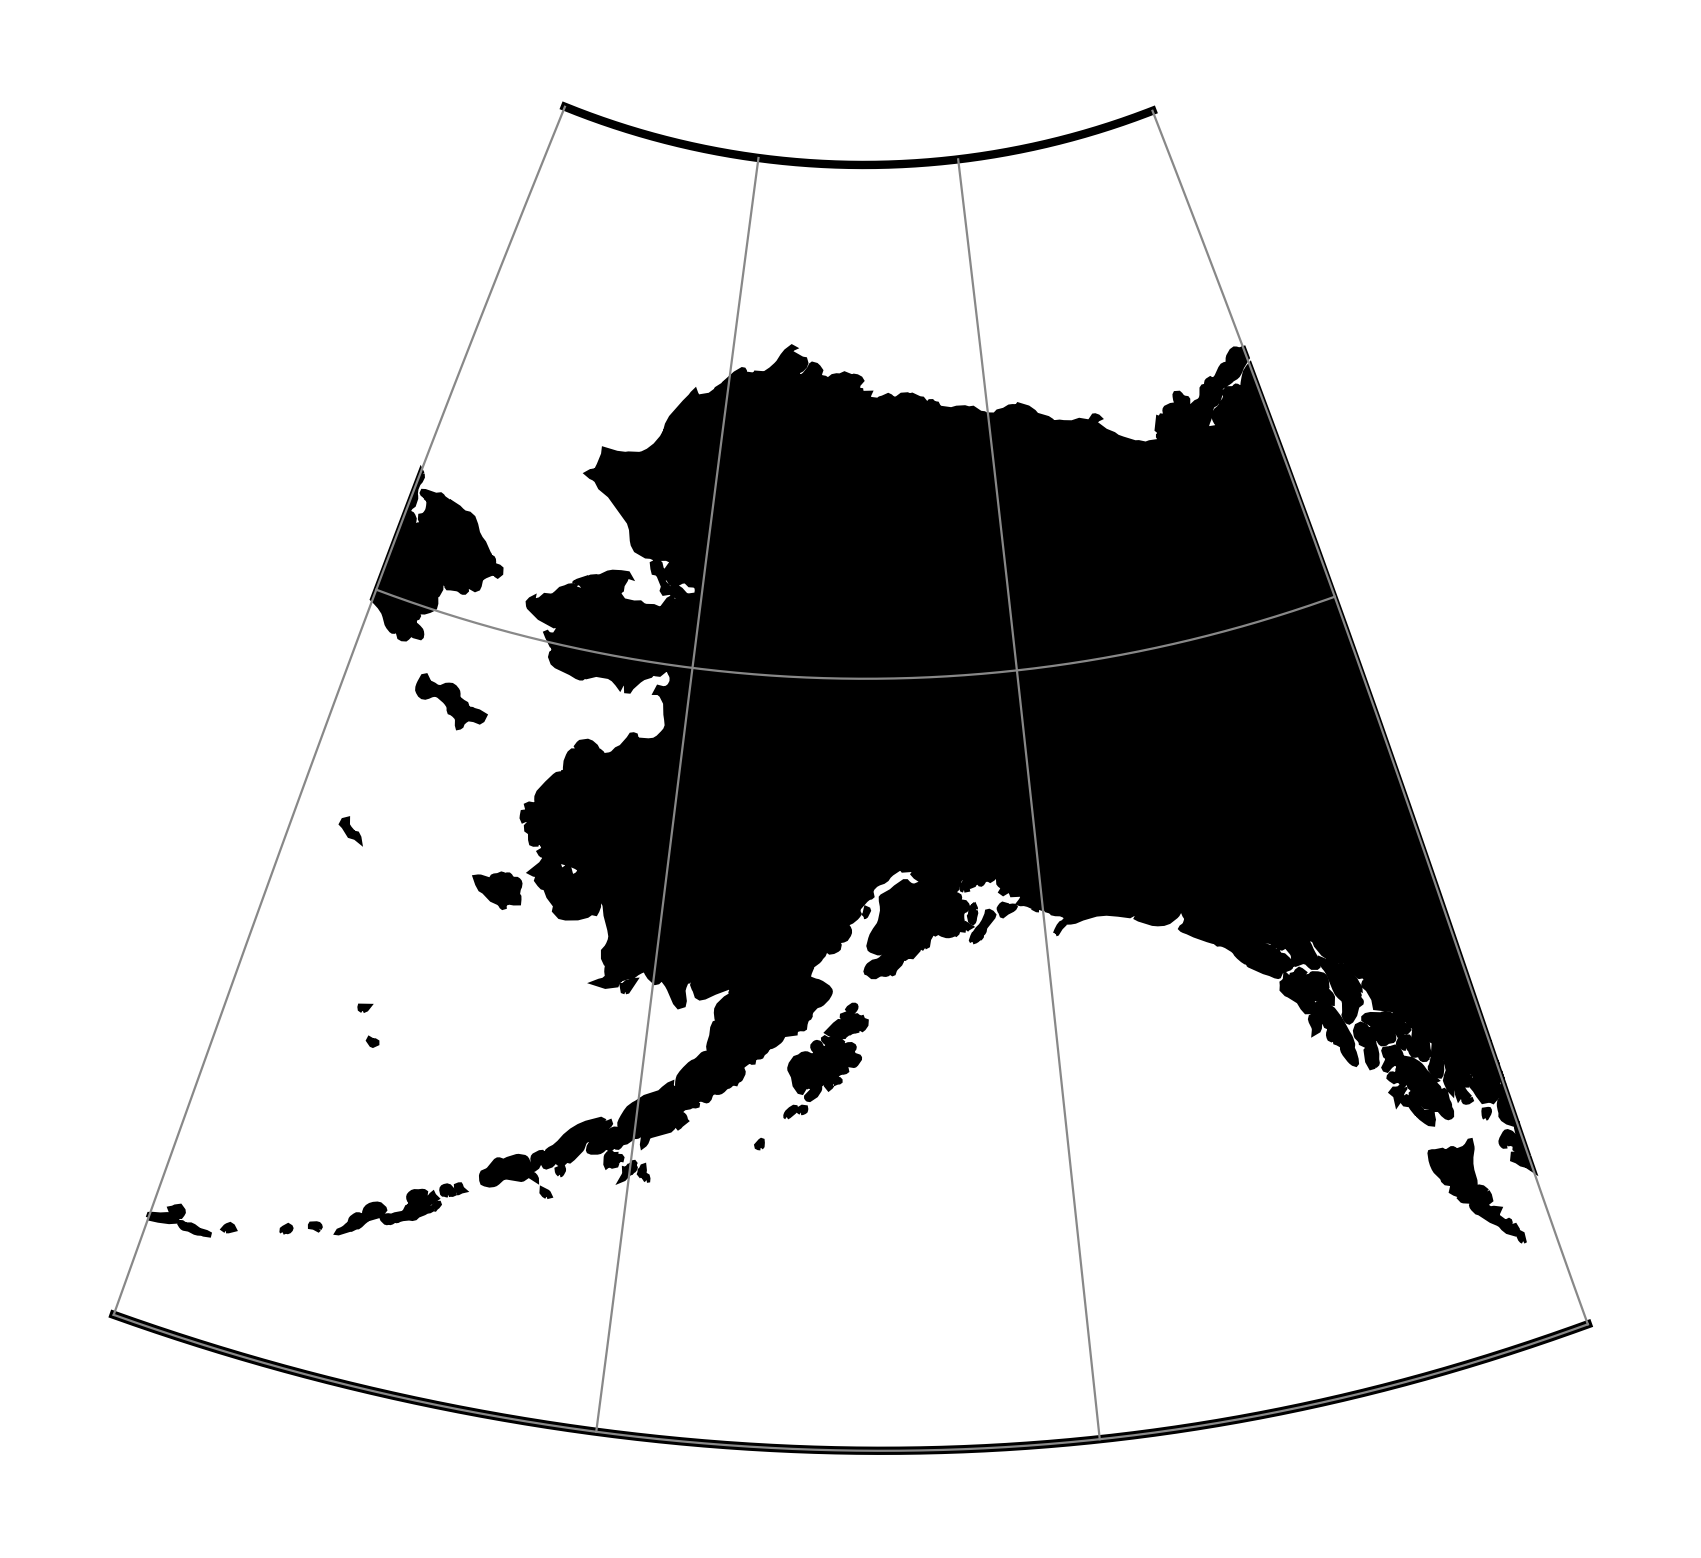 Mod. Stererographics of Alaska